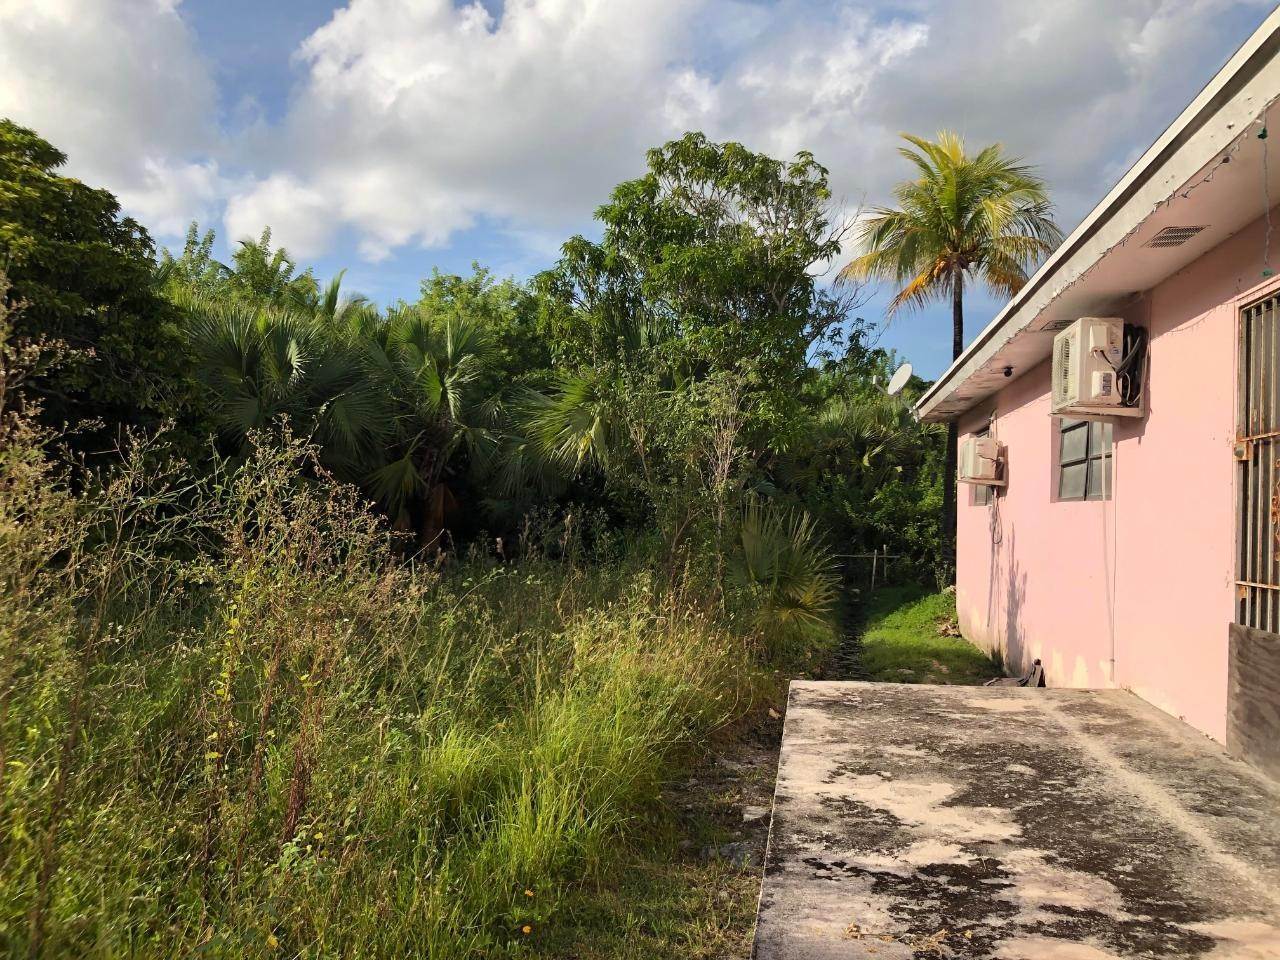 5. Lots / Acreage für Verkauf beim Other New Nassau and Paradise Island, New Providence/Nassau, Bahamas